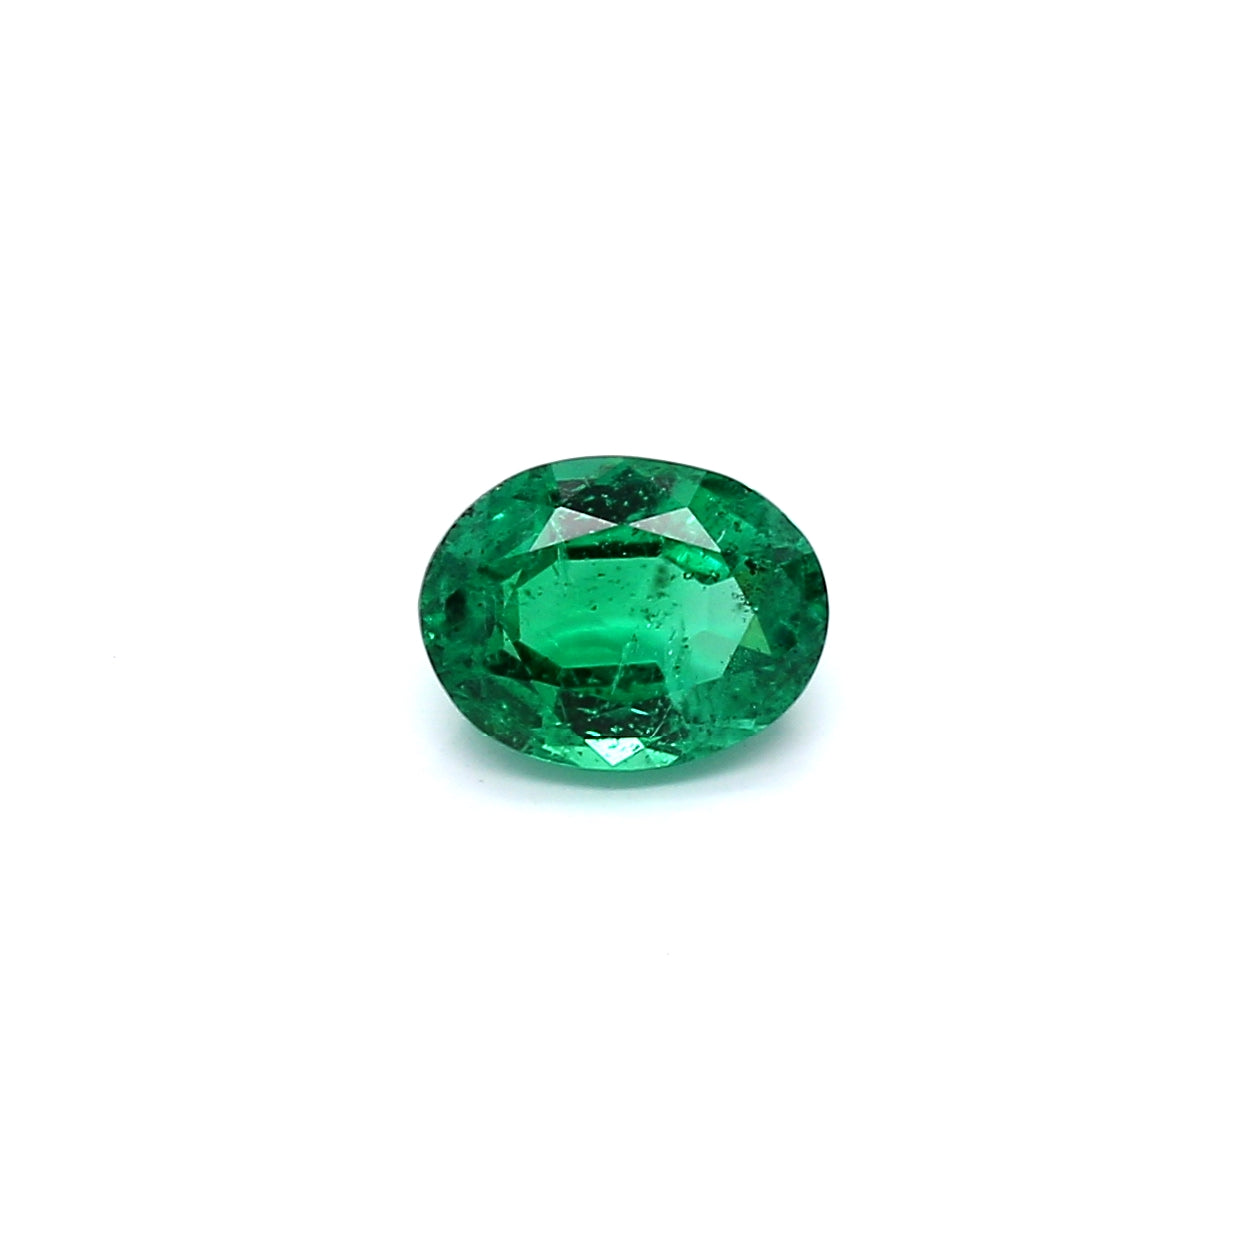 0.91ct Oval Emerald, Minor Oil, Madagascar - 7.17 x 5.52 x 3.69mm